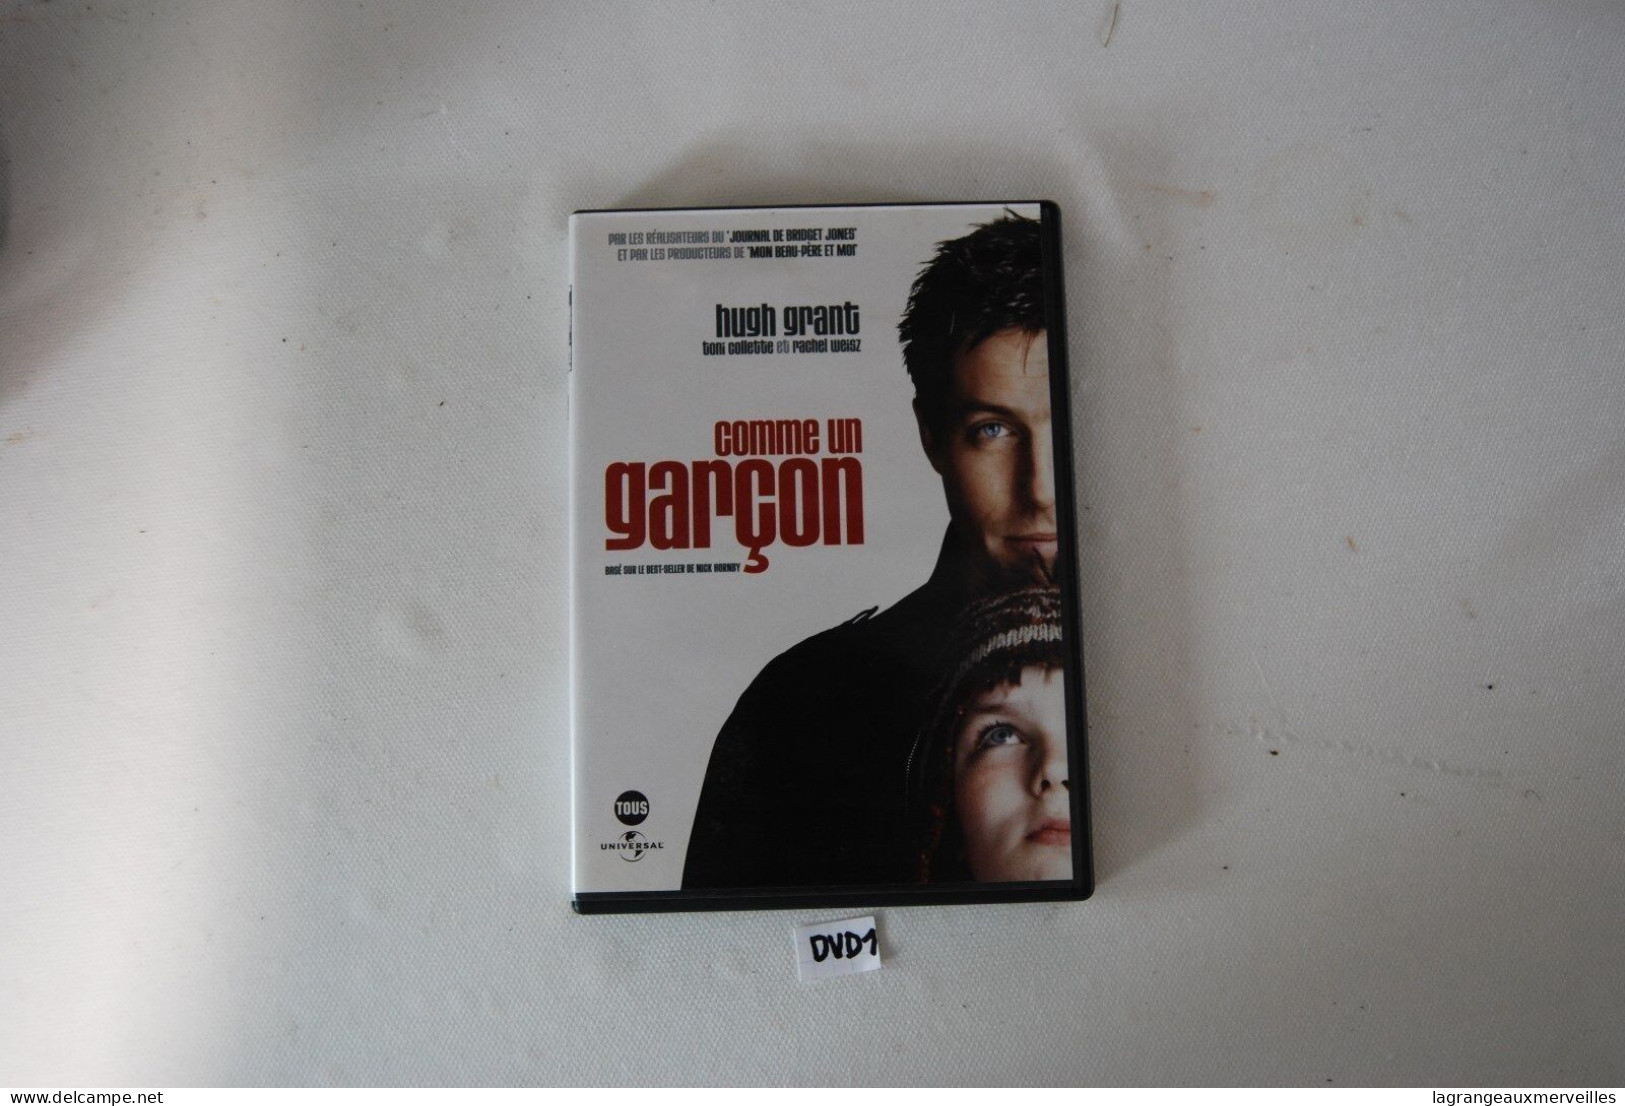 DVD 1 - COMME UN GARCON - HUGH GRANT - Children & Family